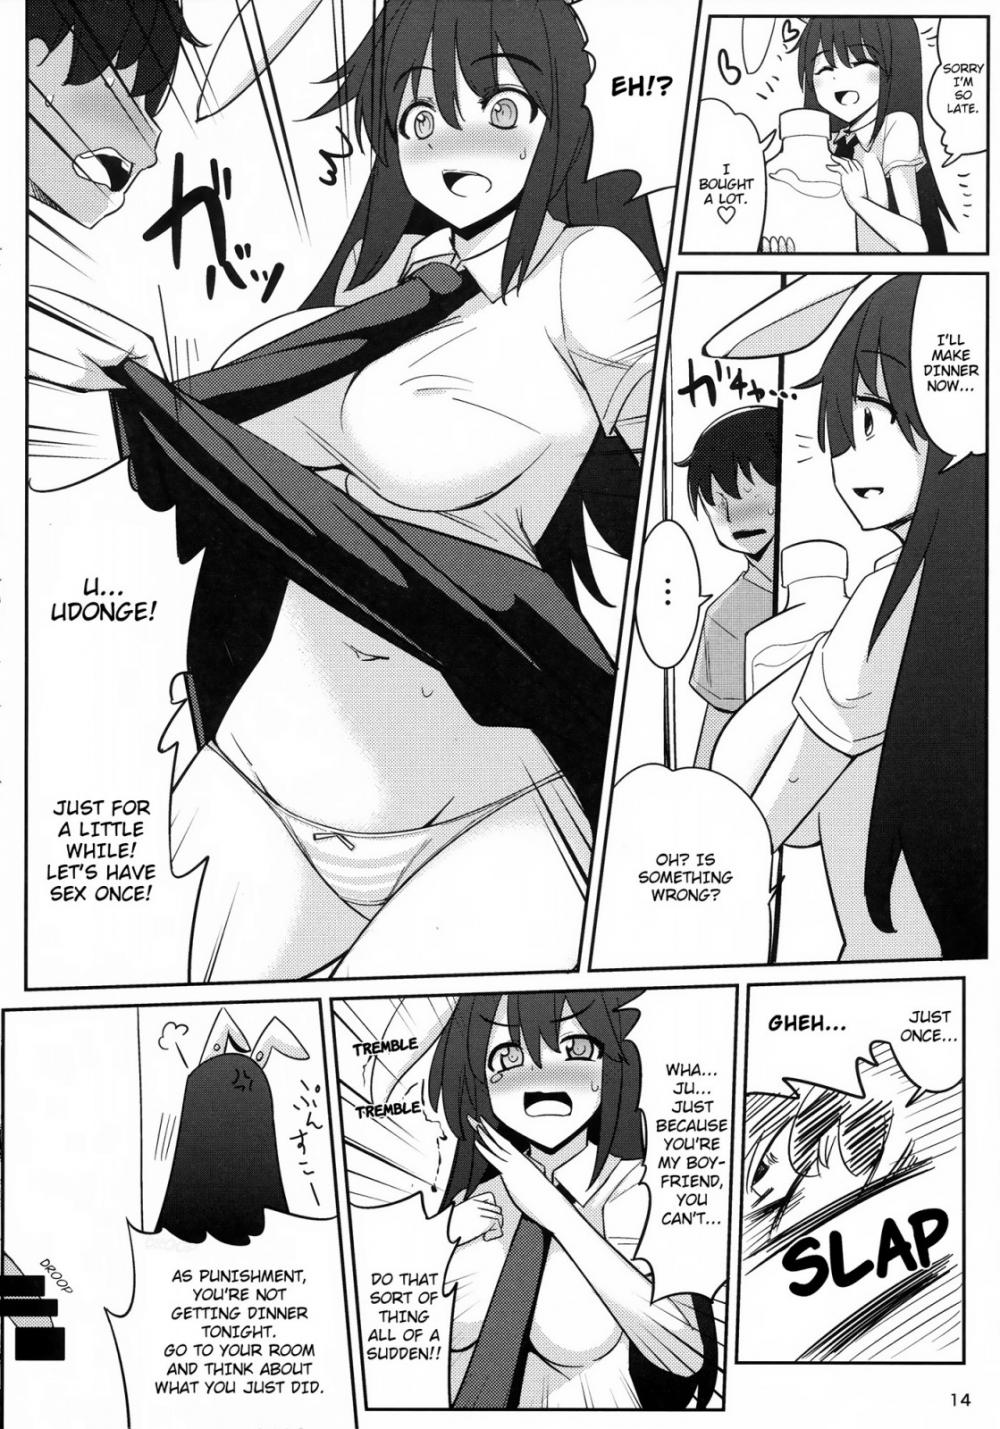 Hentai Manga Comic-Tewi-chan having an Affair-Read-13